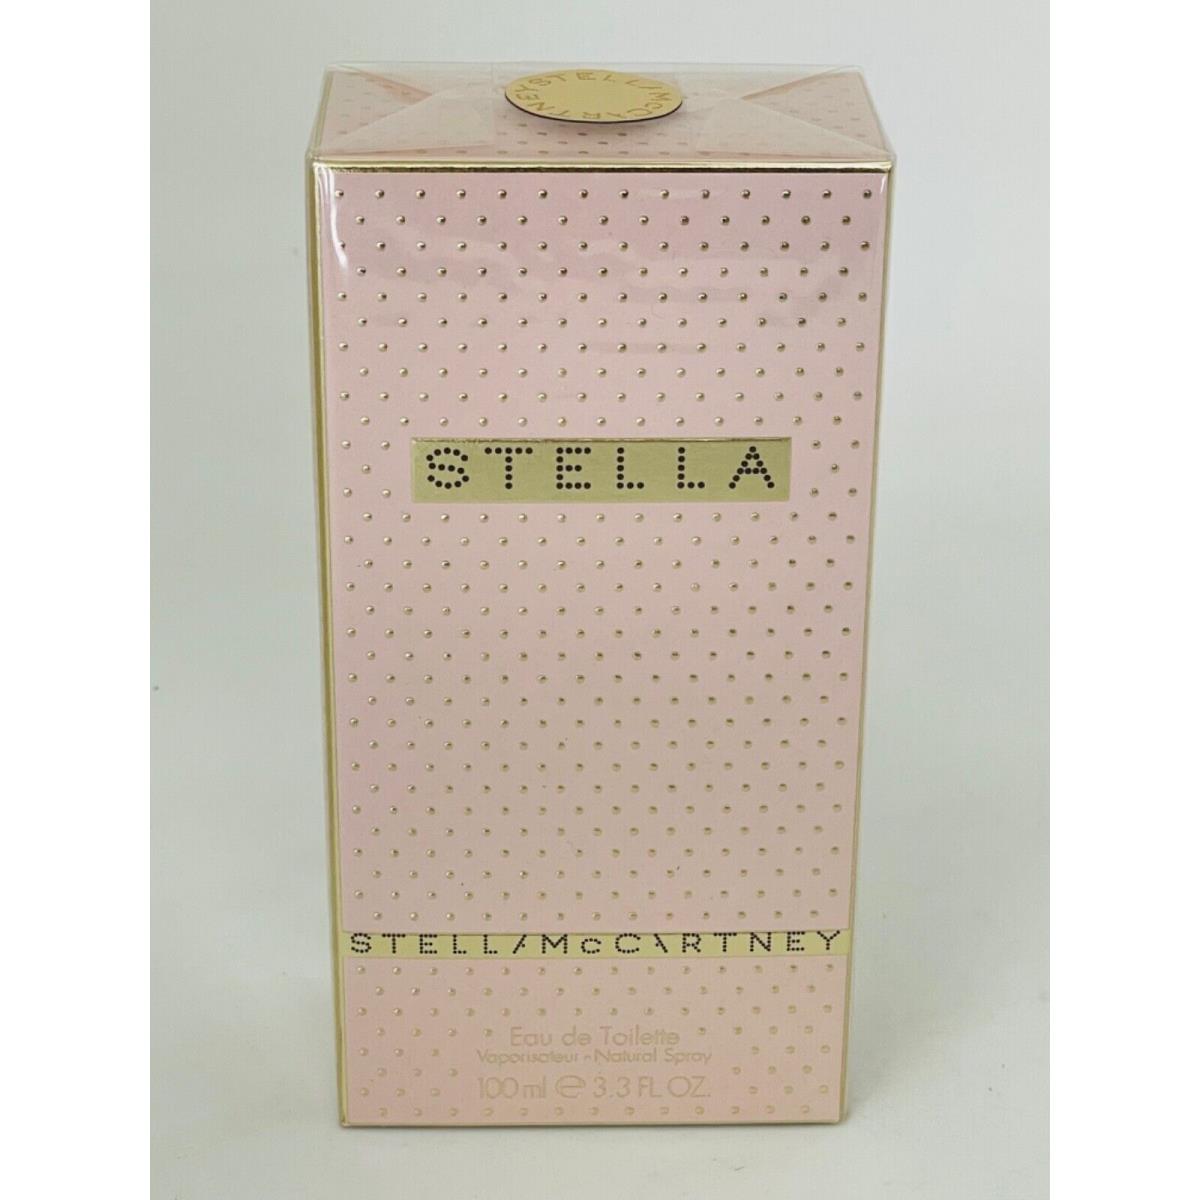 Stella by Stella Mccartney 3.3 oz / 3.4 oz / 100 ML Edt Spray Women